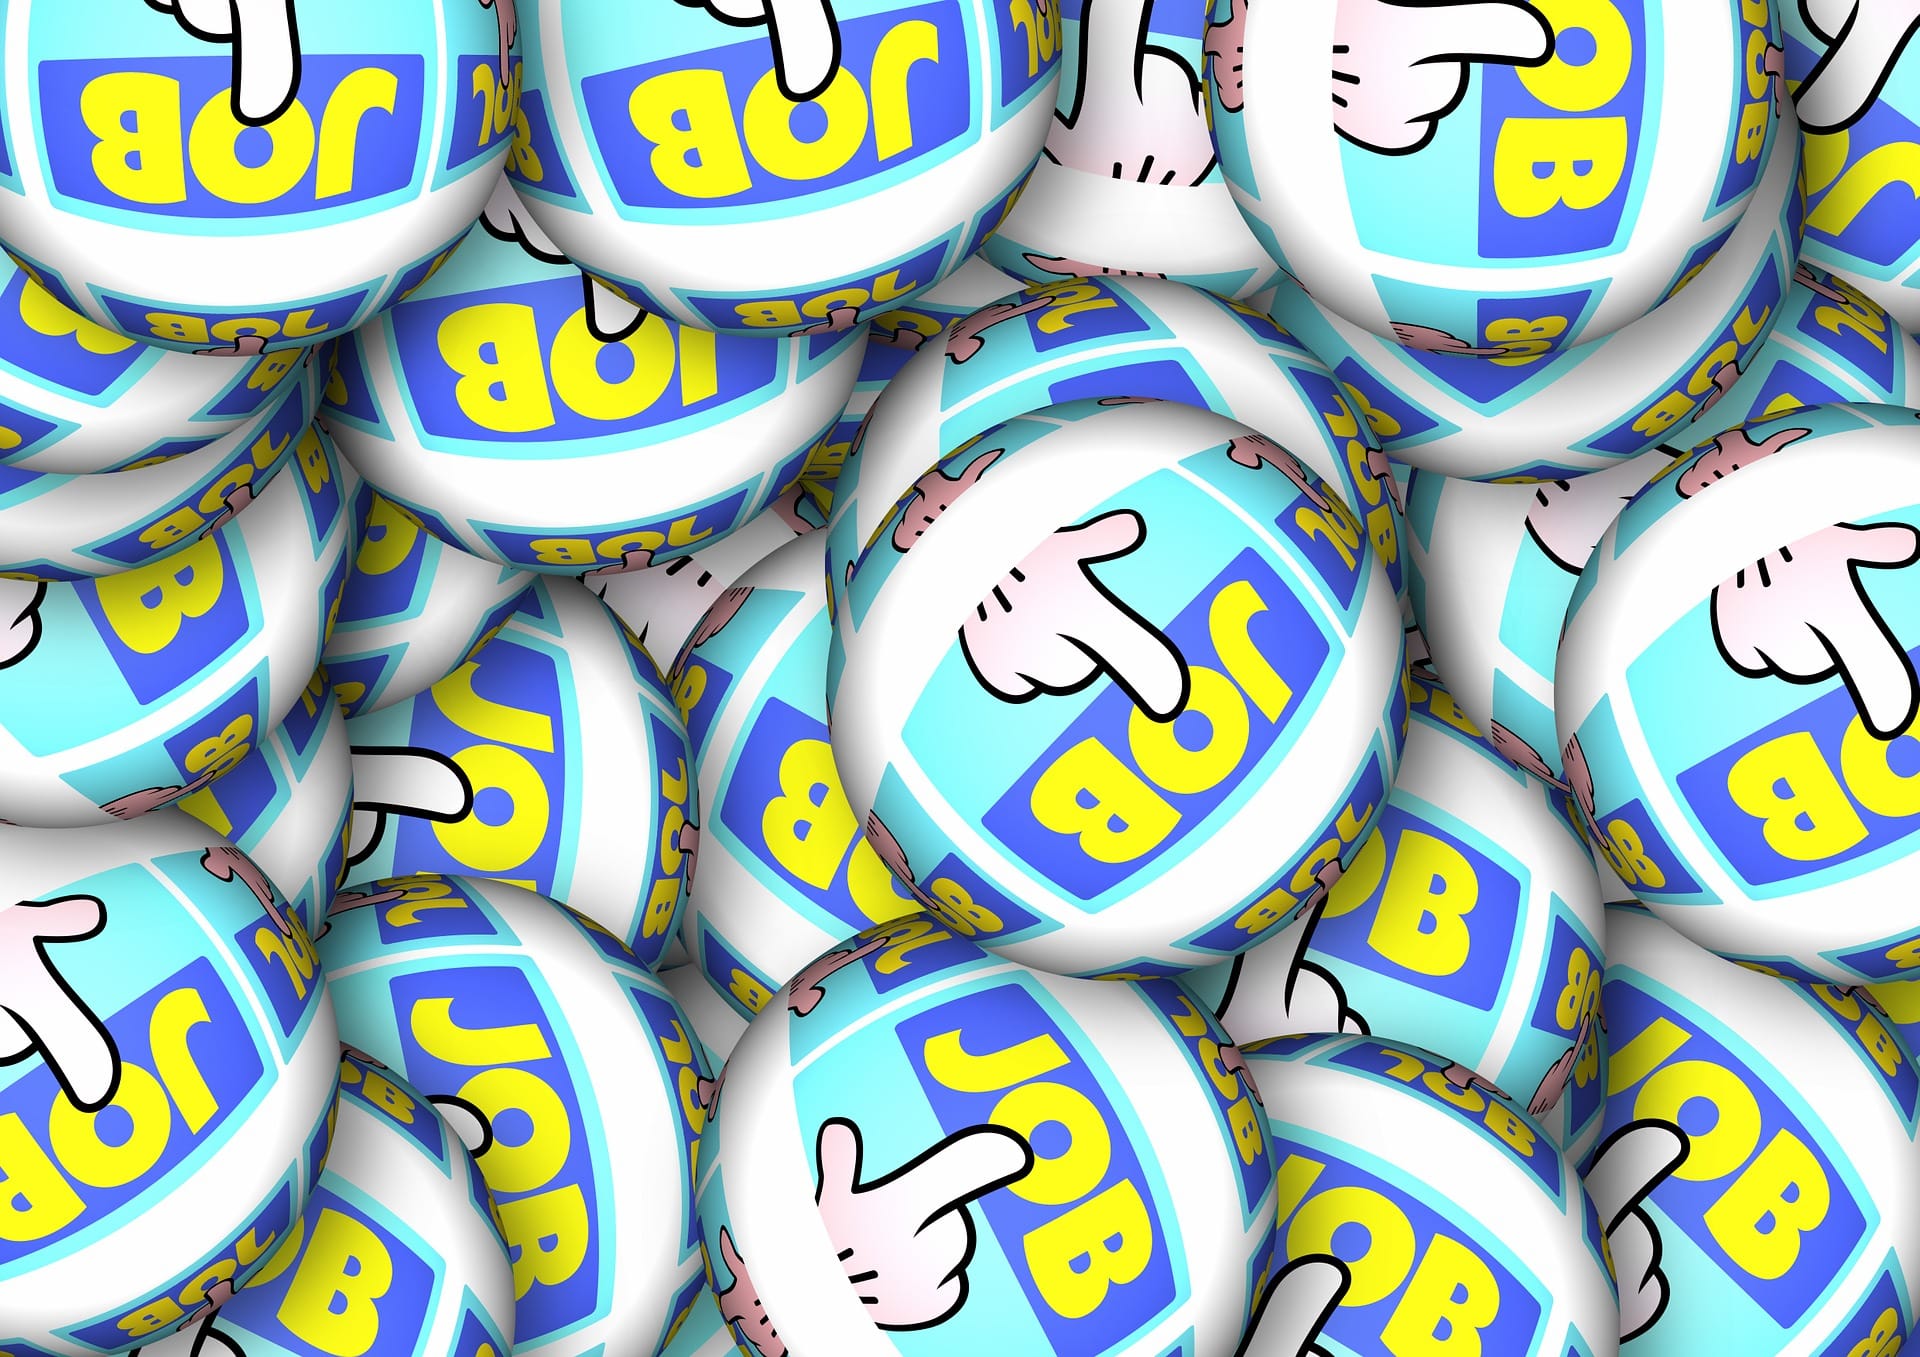 bingo balls with the word job printed on them